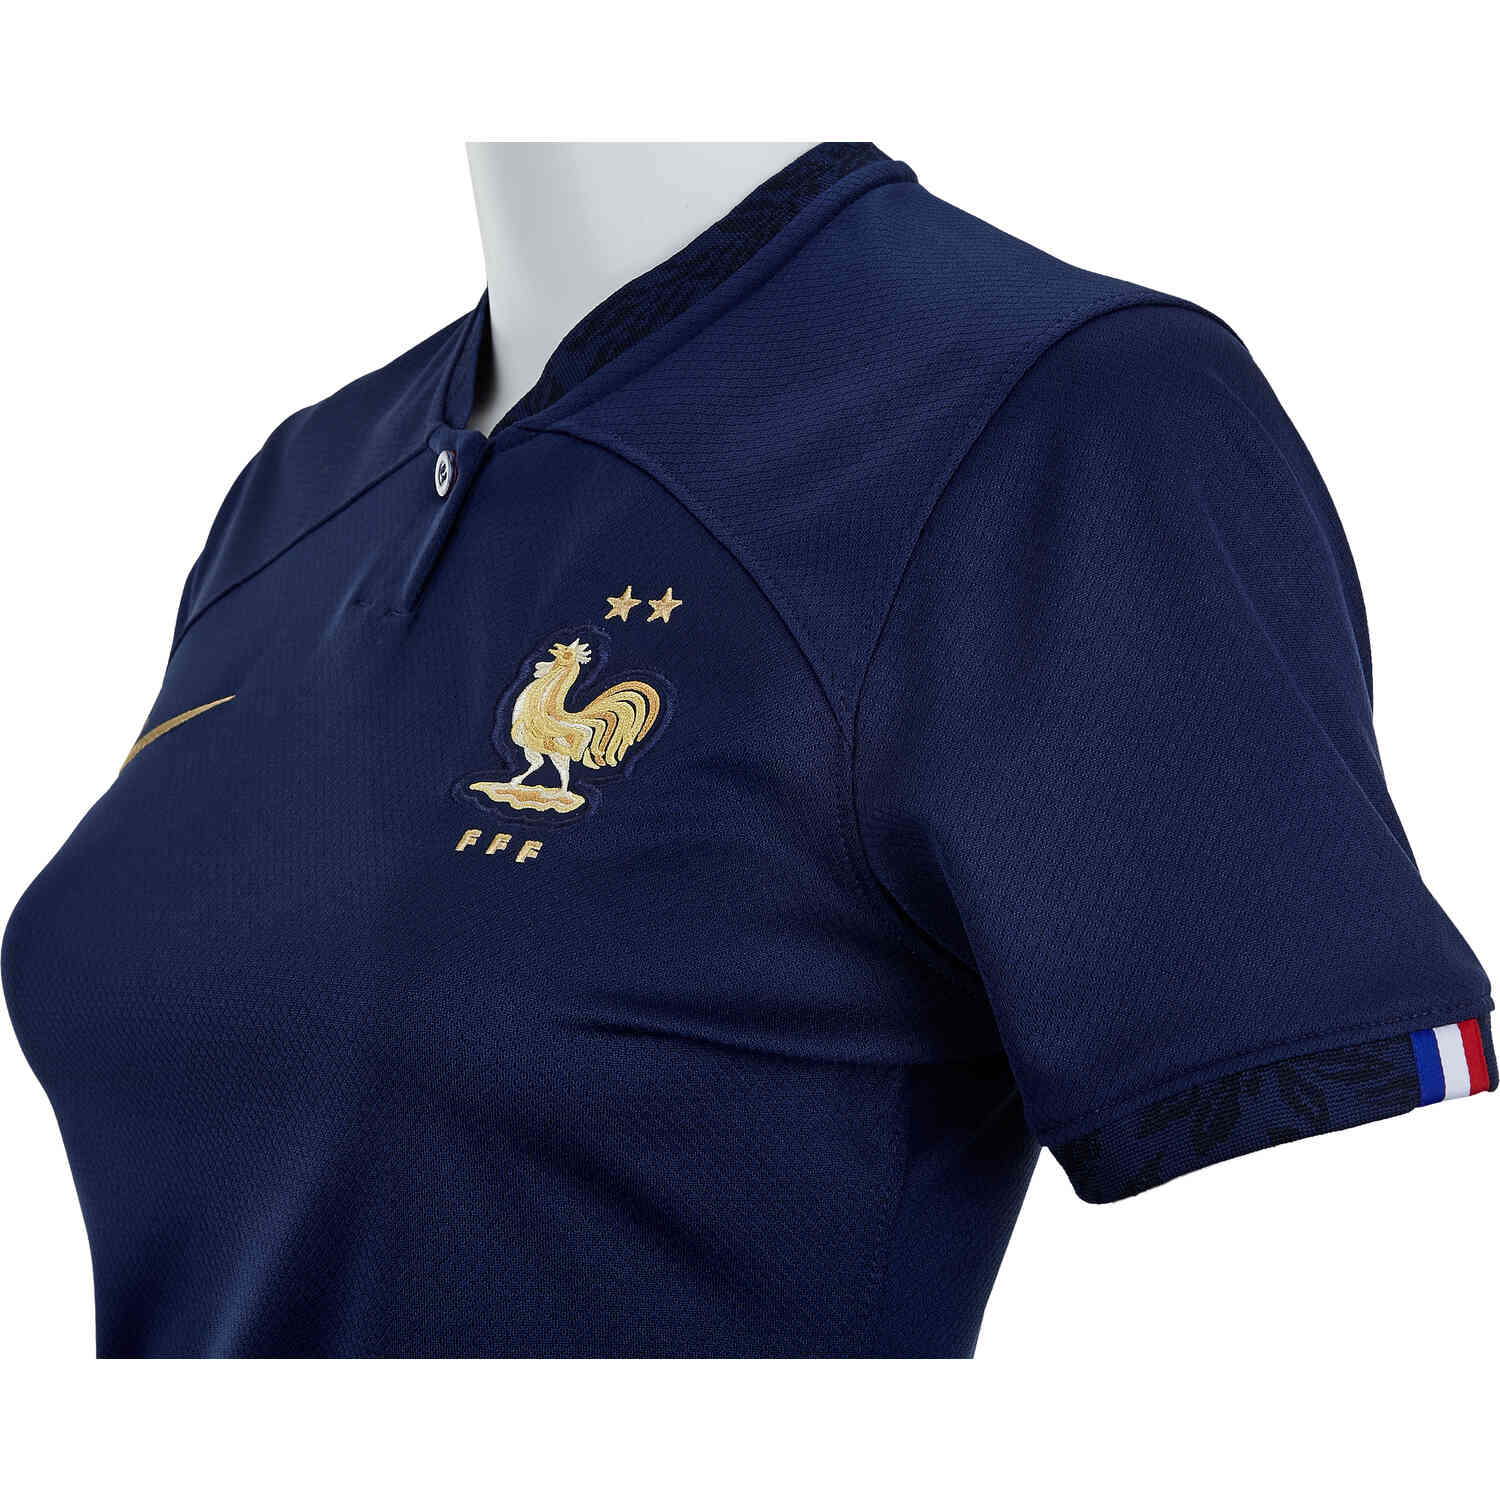 Maillot équipe de France 2022, Nike home-kit France